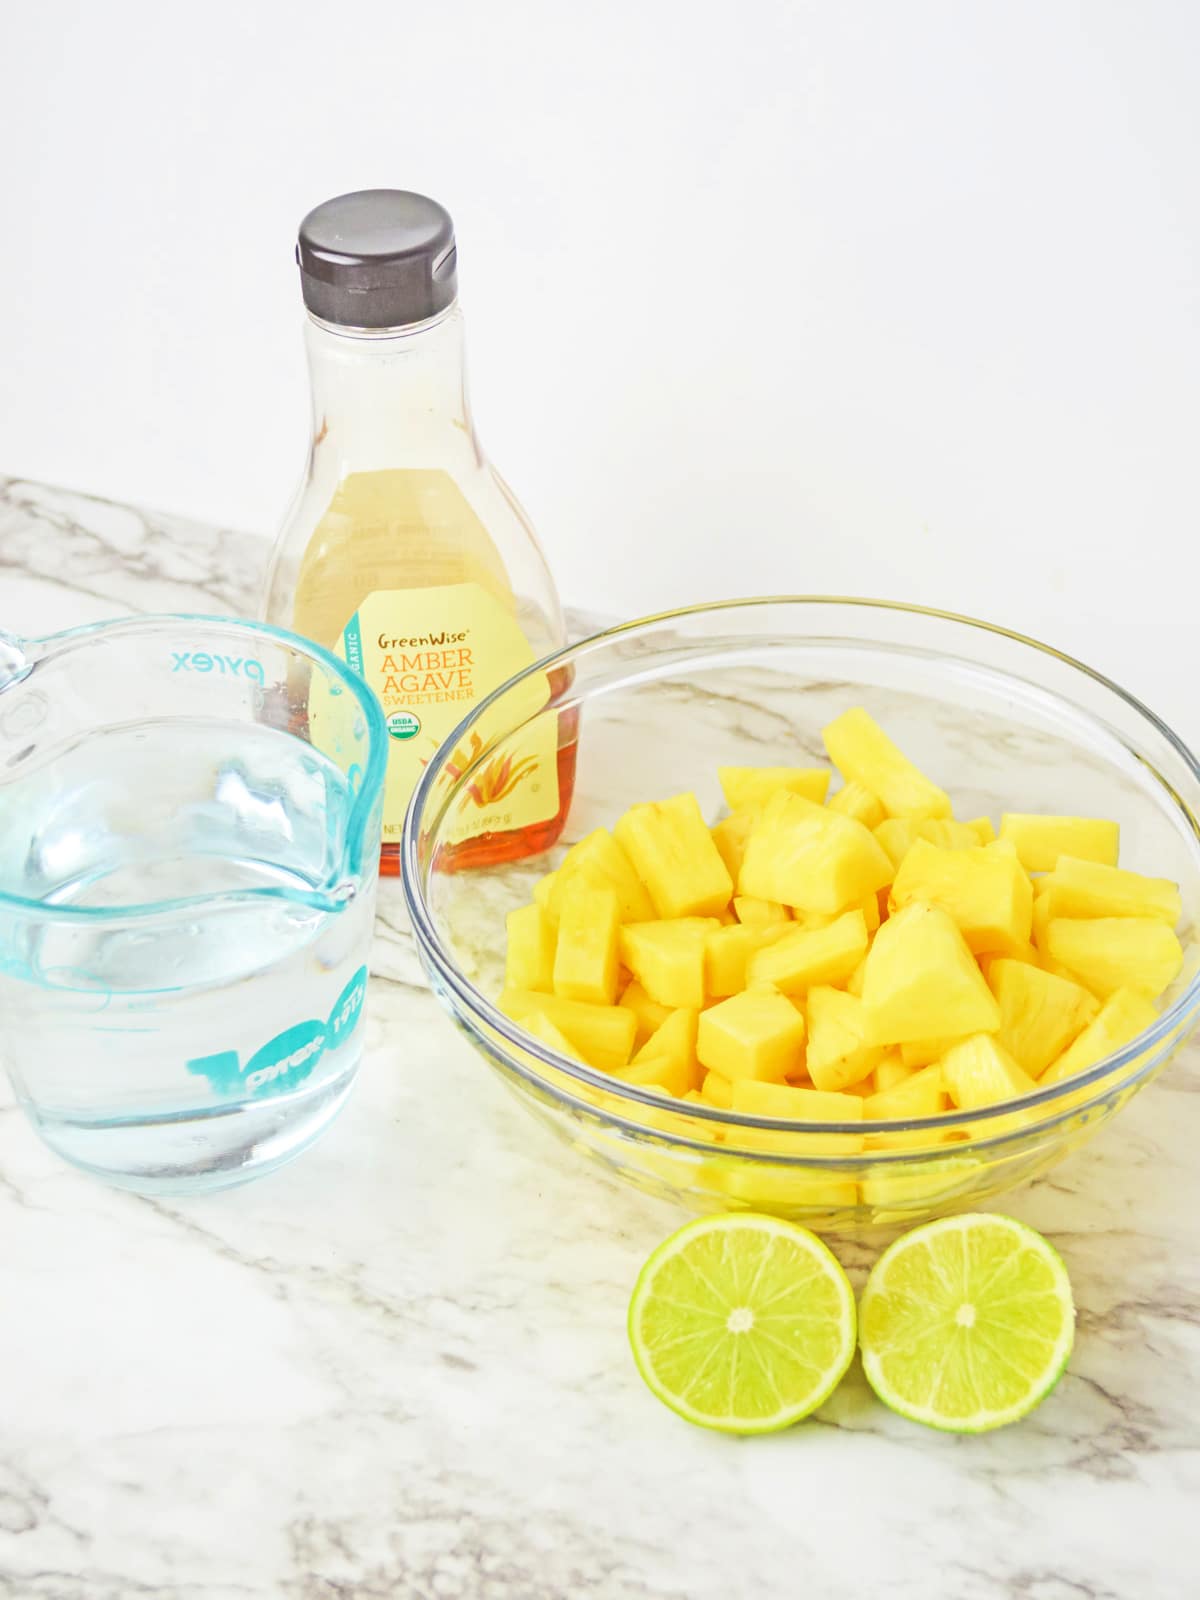 Pineapple agua fresca ingredients